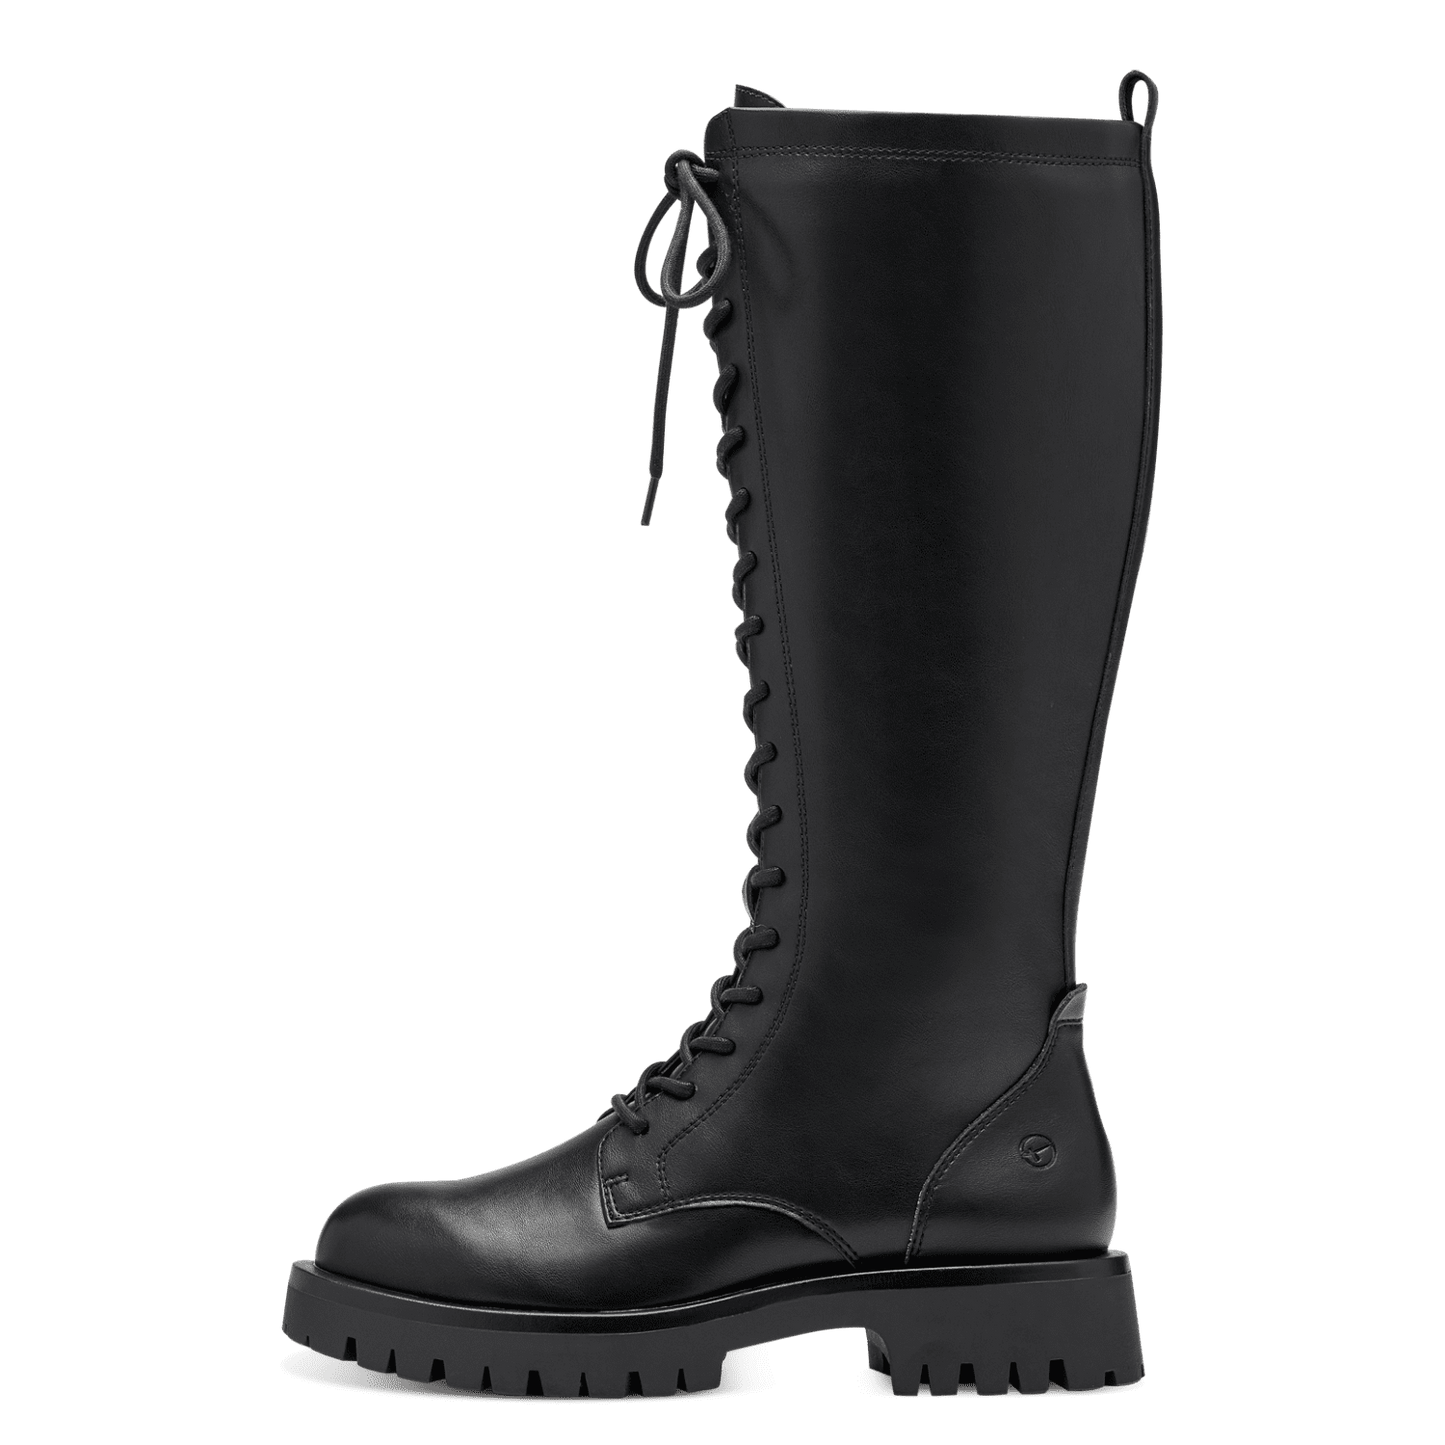 Tamaris 1-25609 black lace up/zip knee high boot